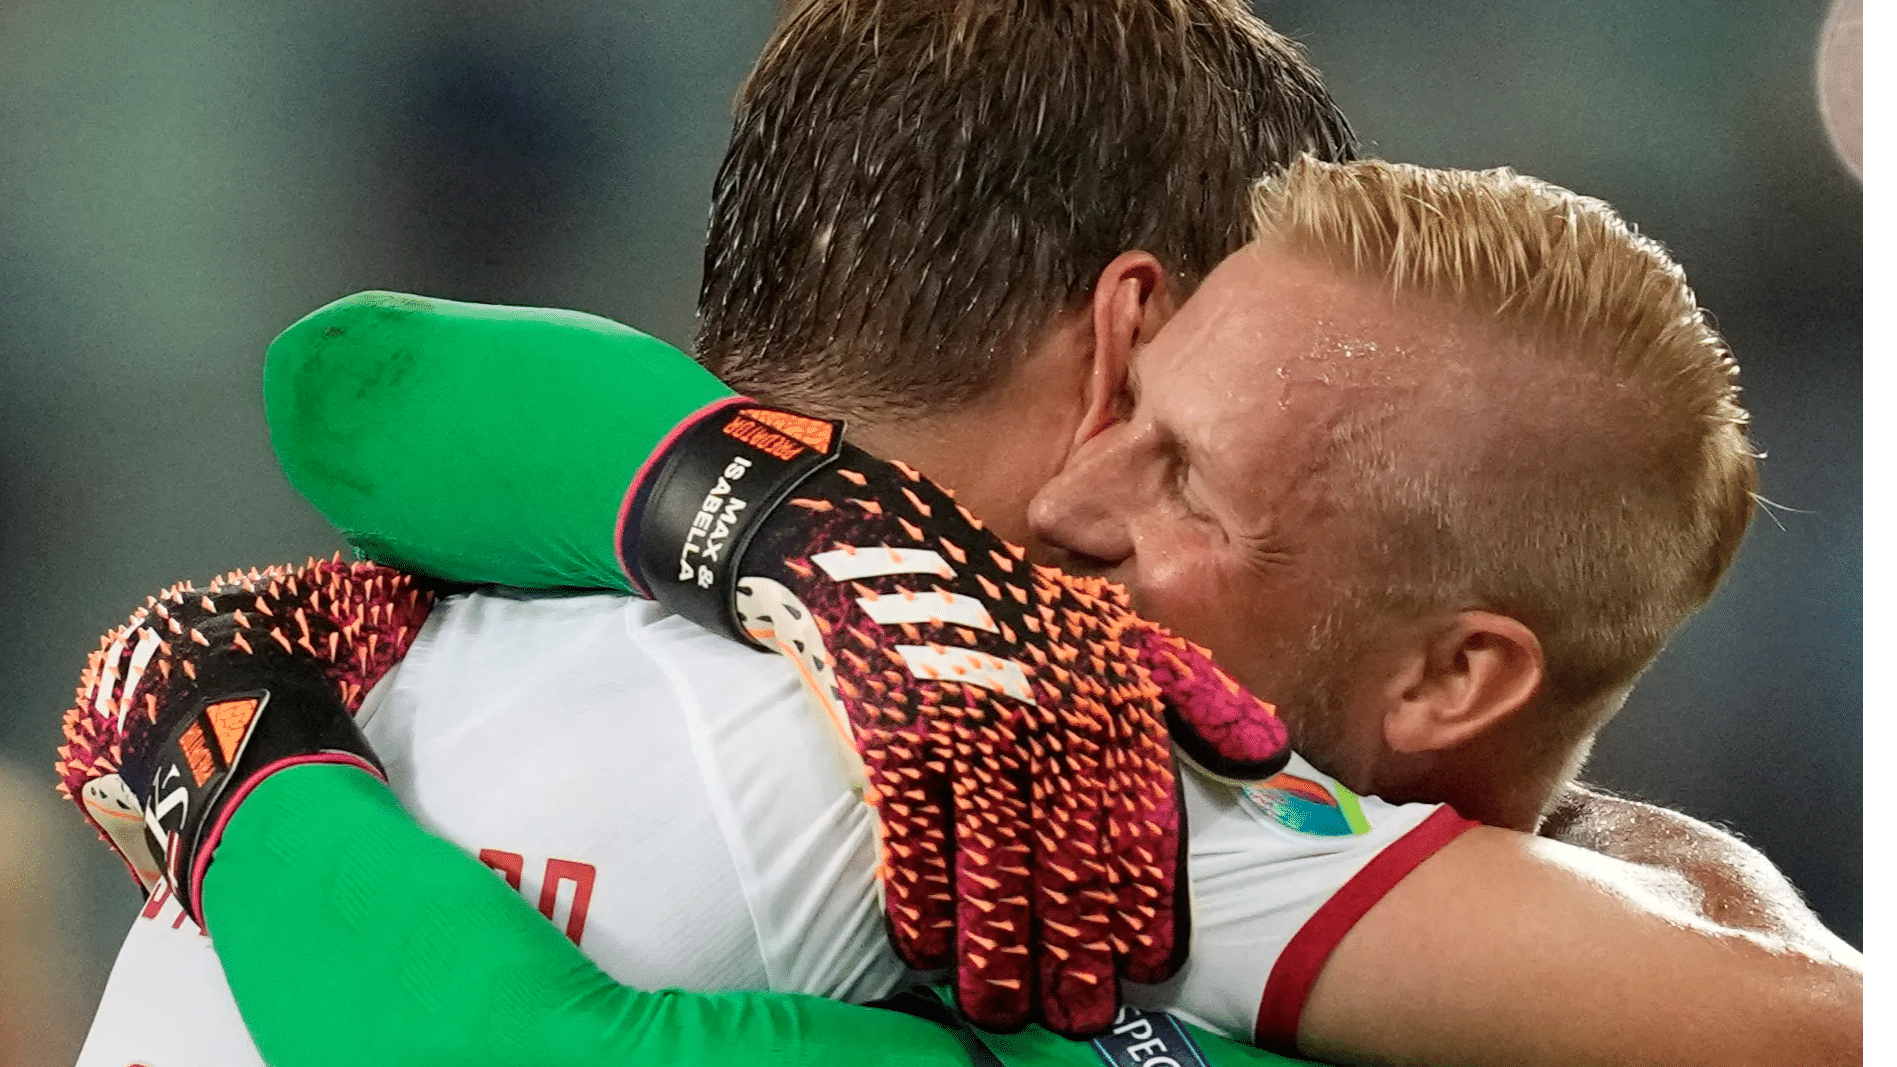 Euro 2020: Denmark through to semifinal after a close win against Czech Republic